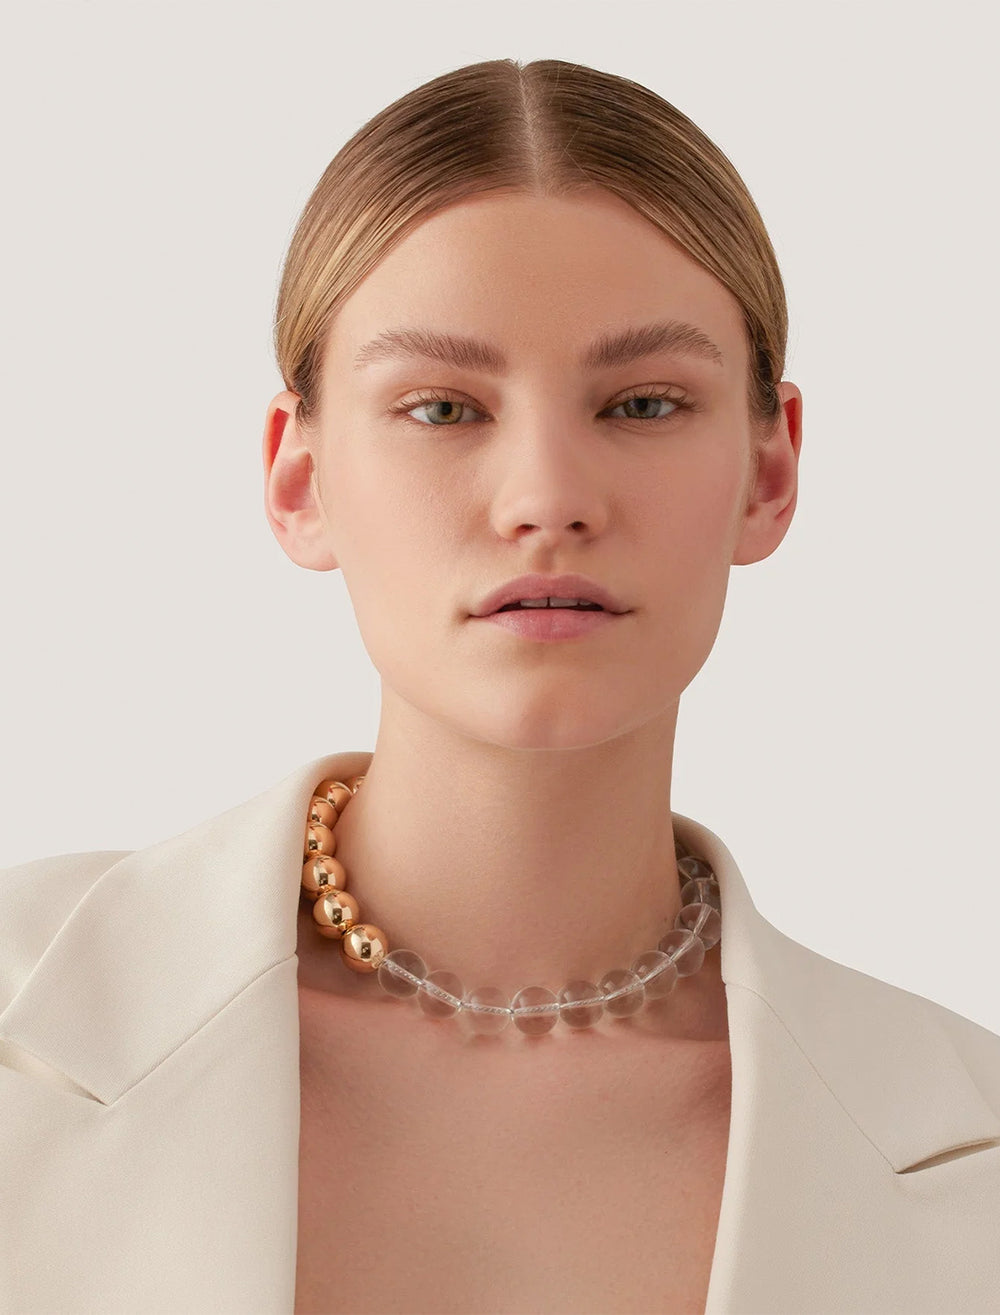 model wearing lyra necklace